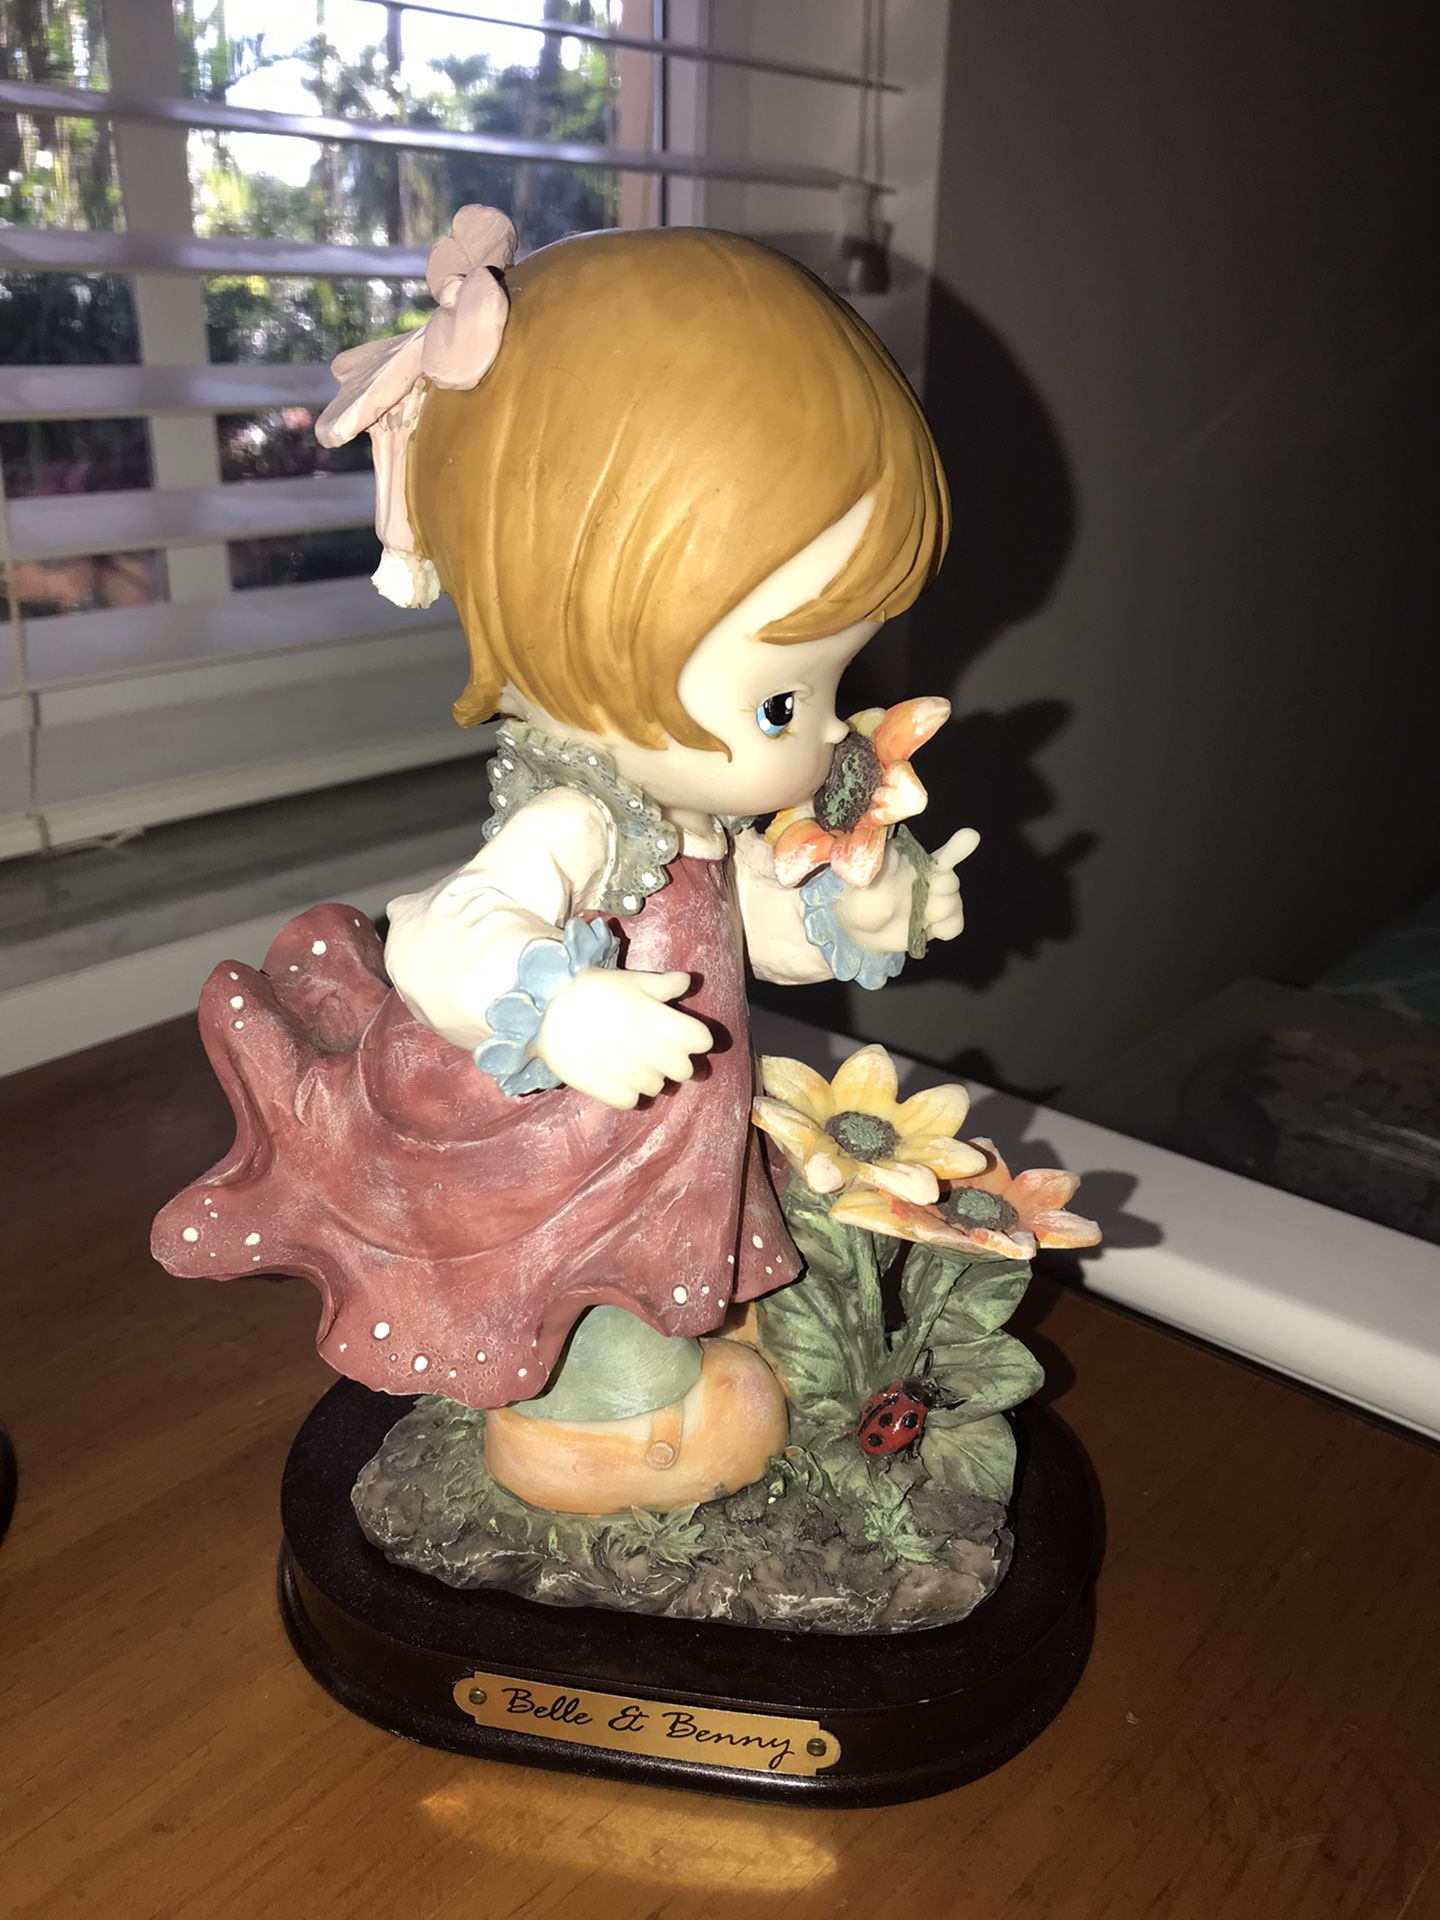 Belle & Benny Girl figurine